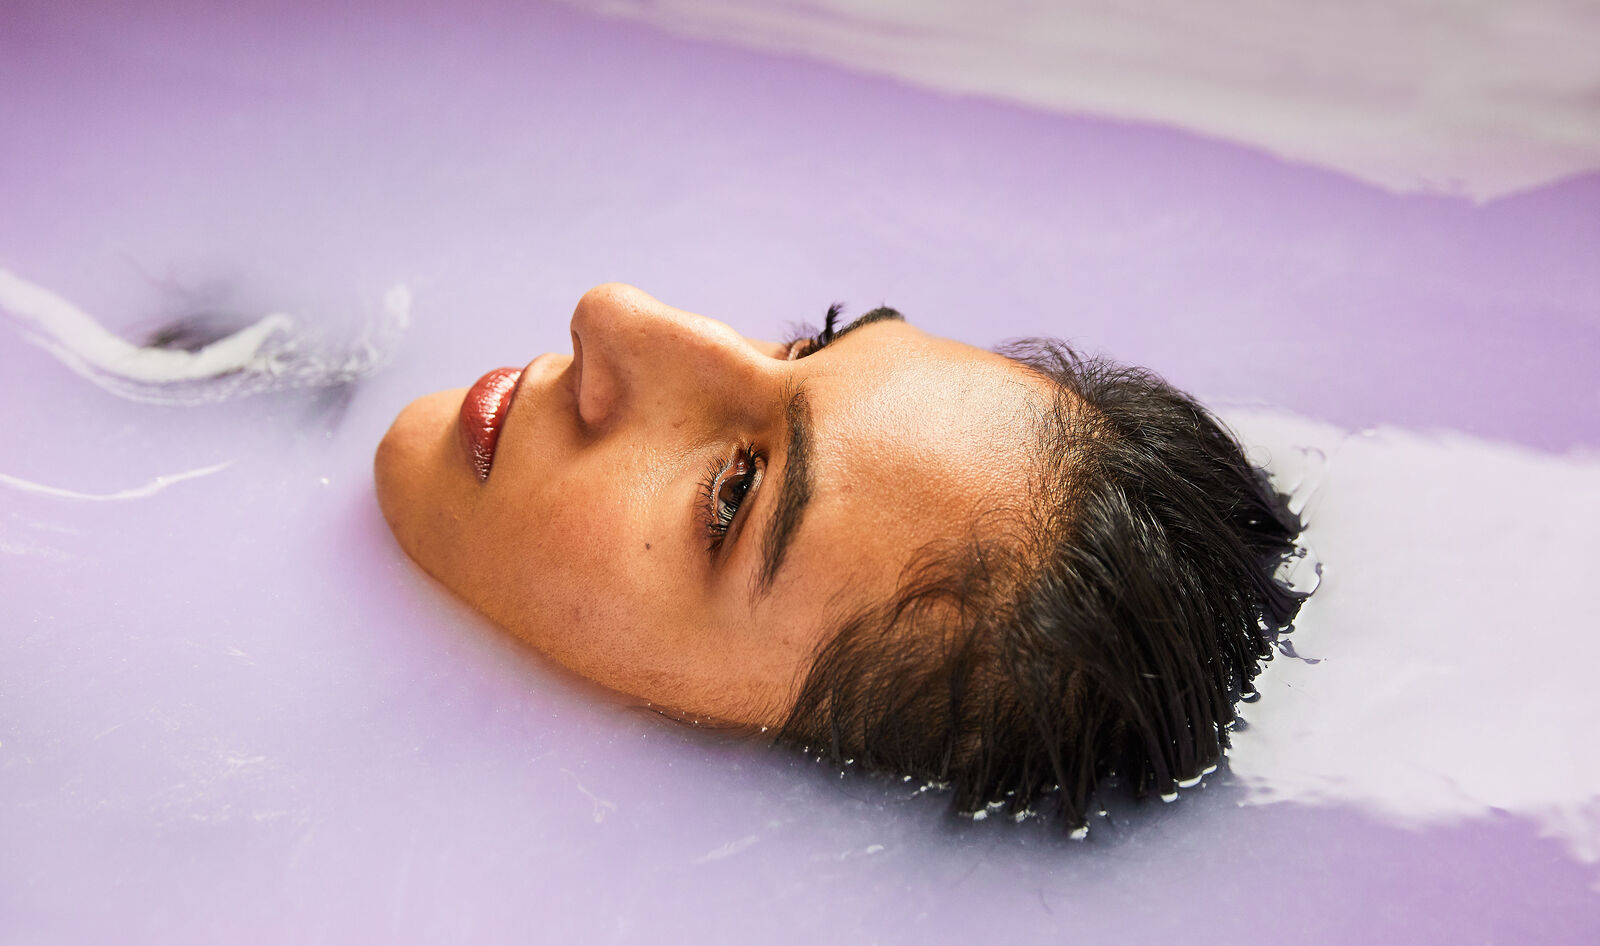 &nbsp;LUSH Launches Ariana Grande-Inspired “God is a Woman” Vegan Bath Bomb